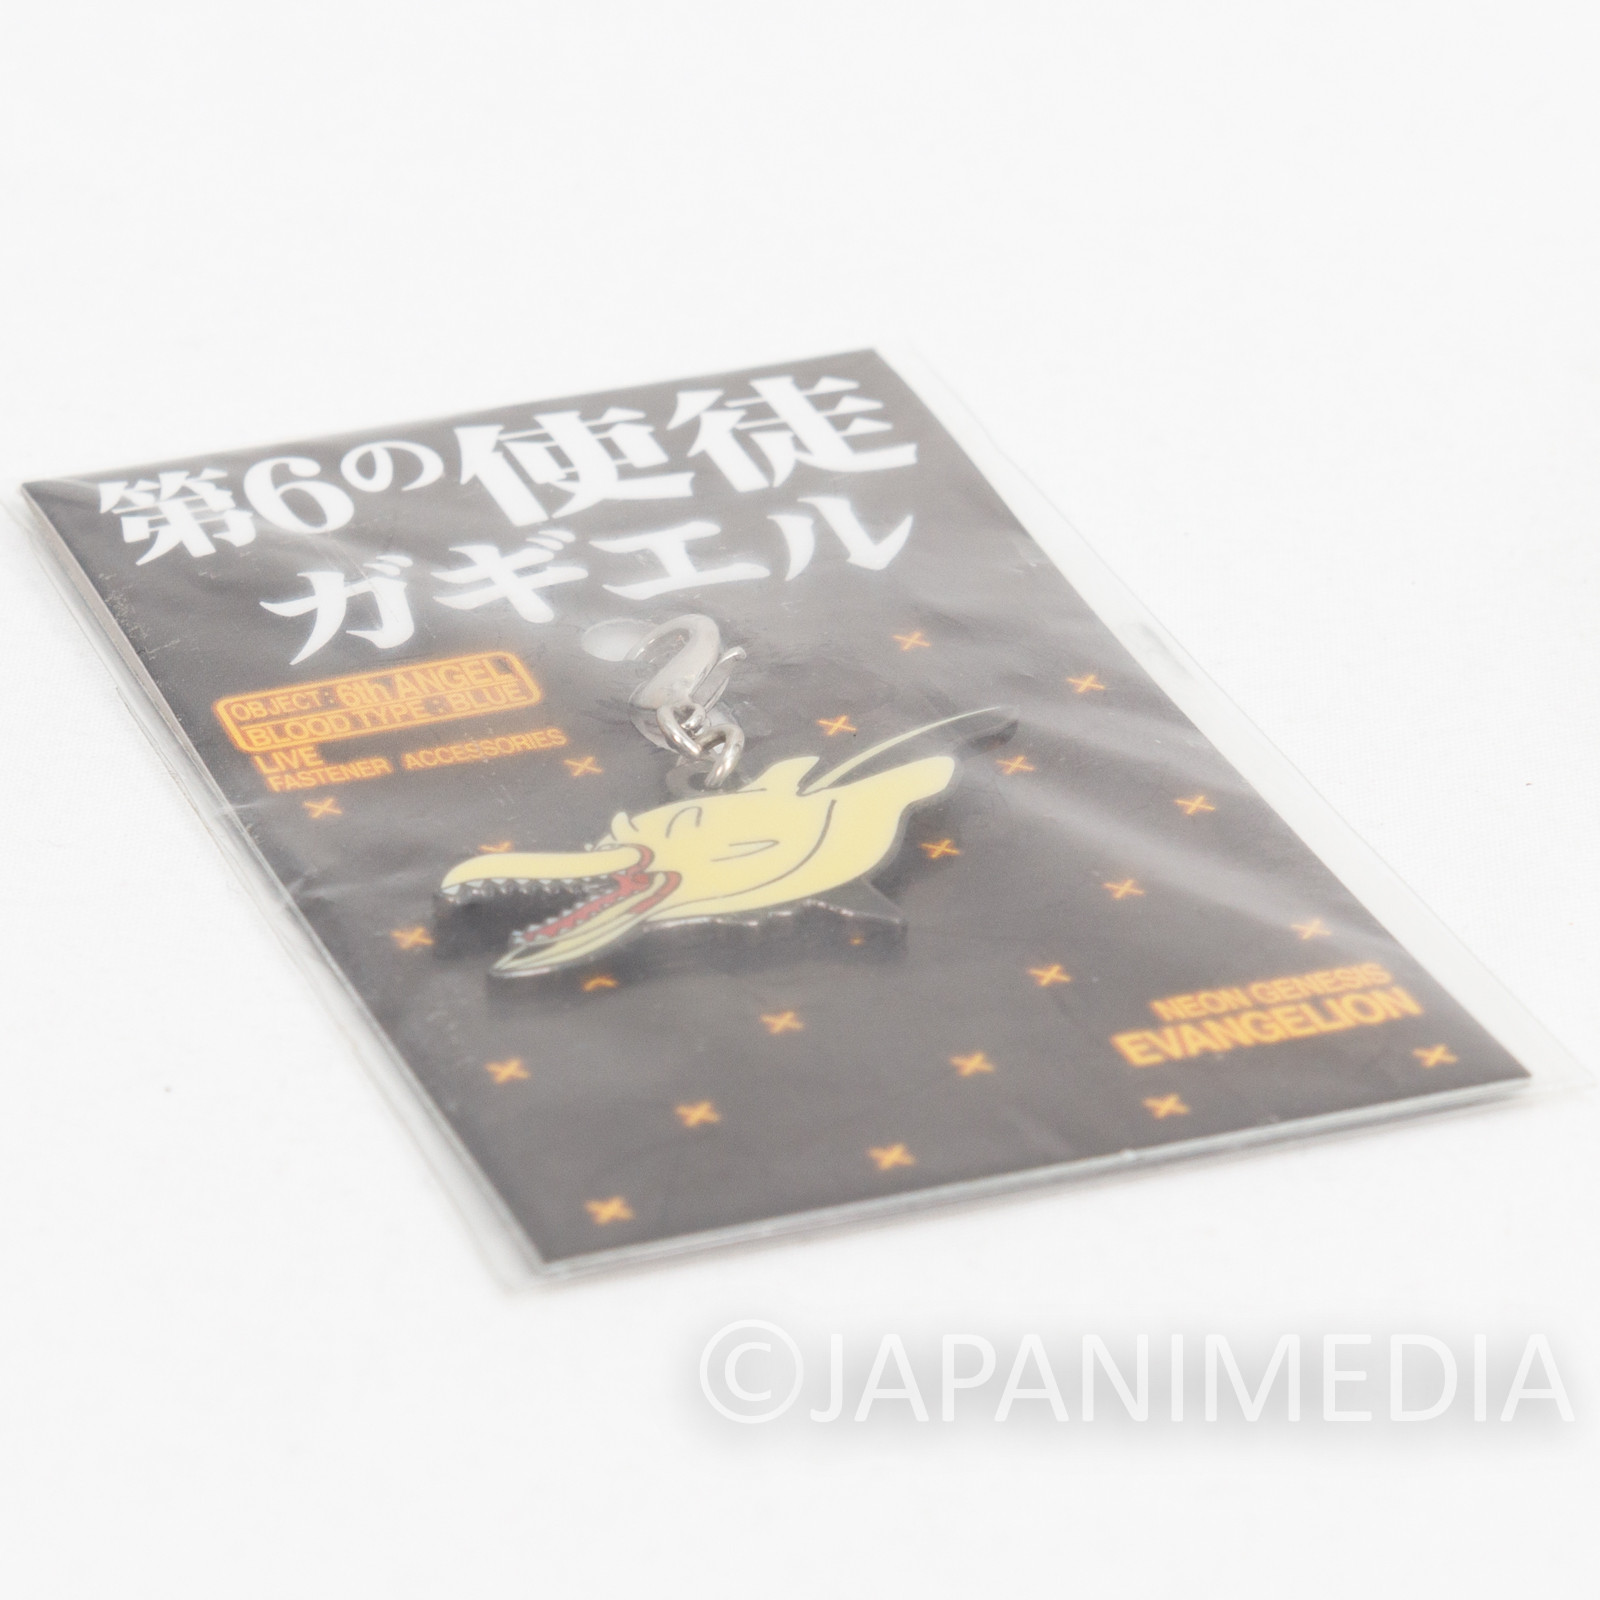 Evangelion 6th Angel Shito Gaghiel Mascot Charm Fastener Accessories JAPAN ANIME MANGA